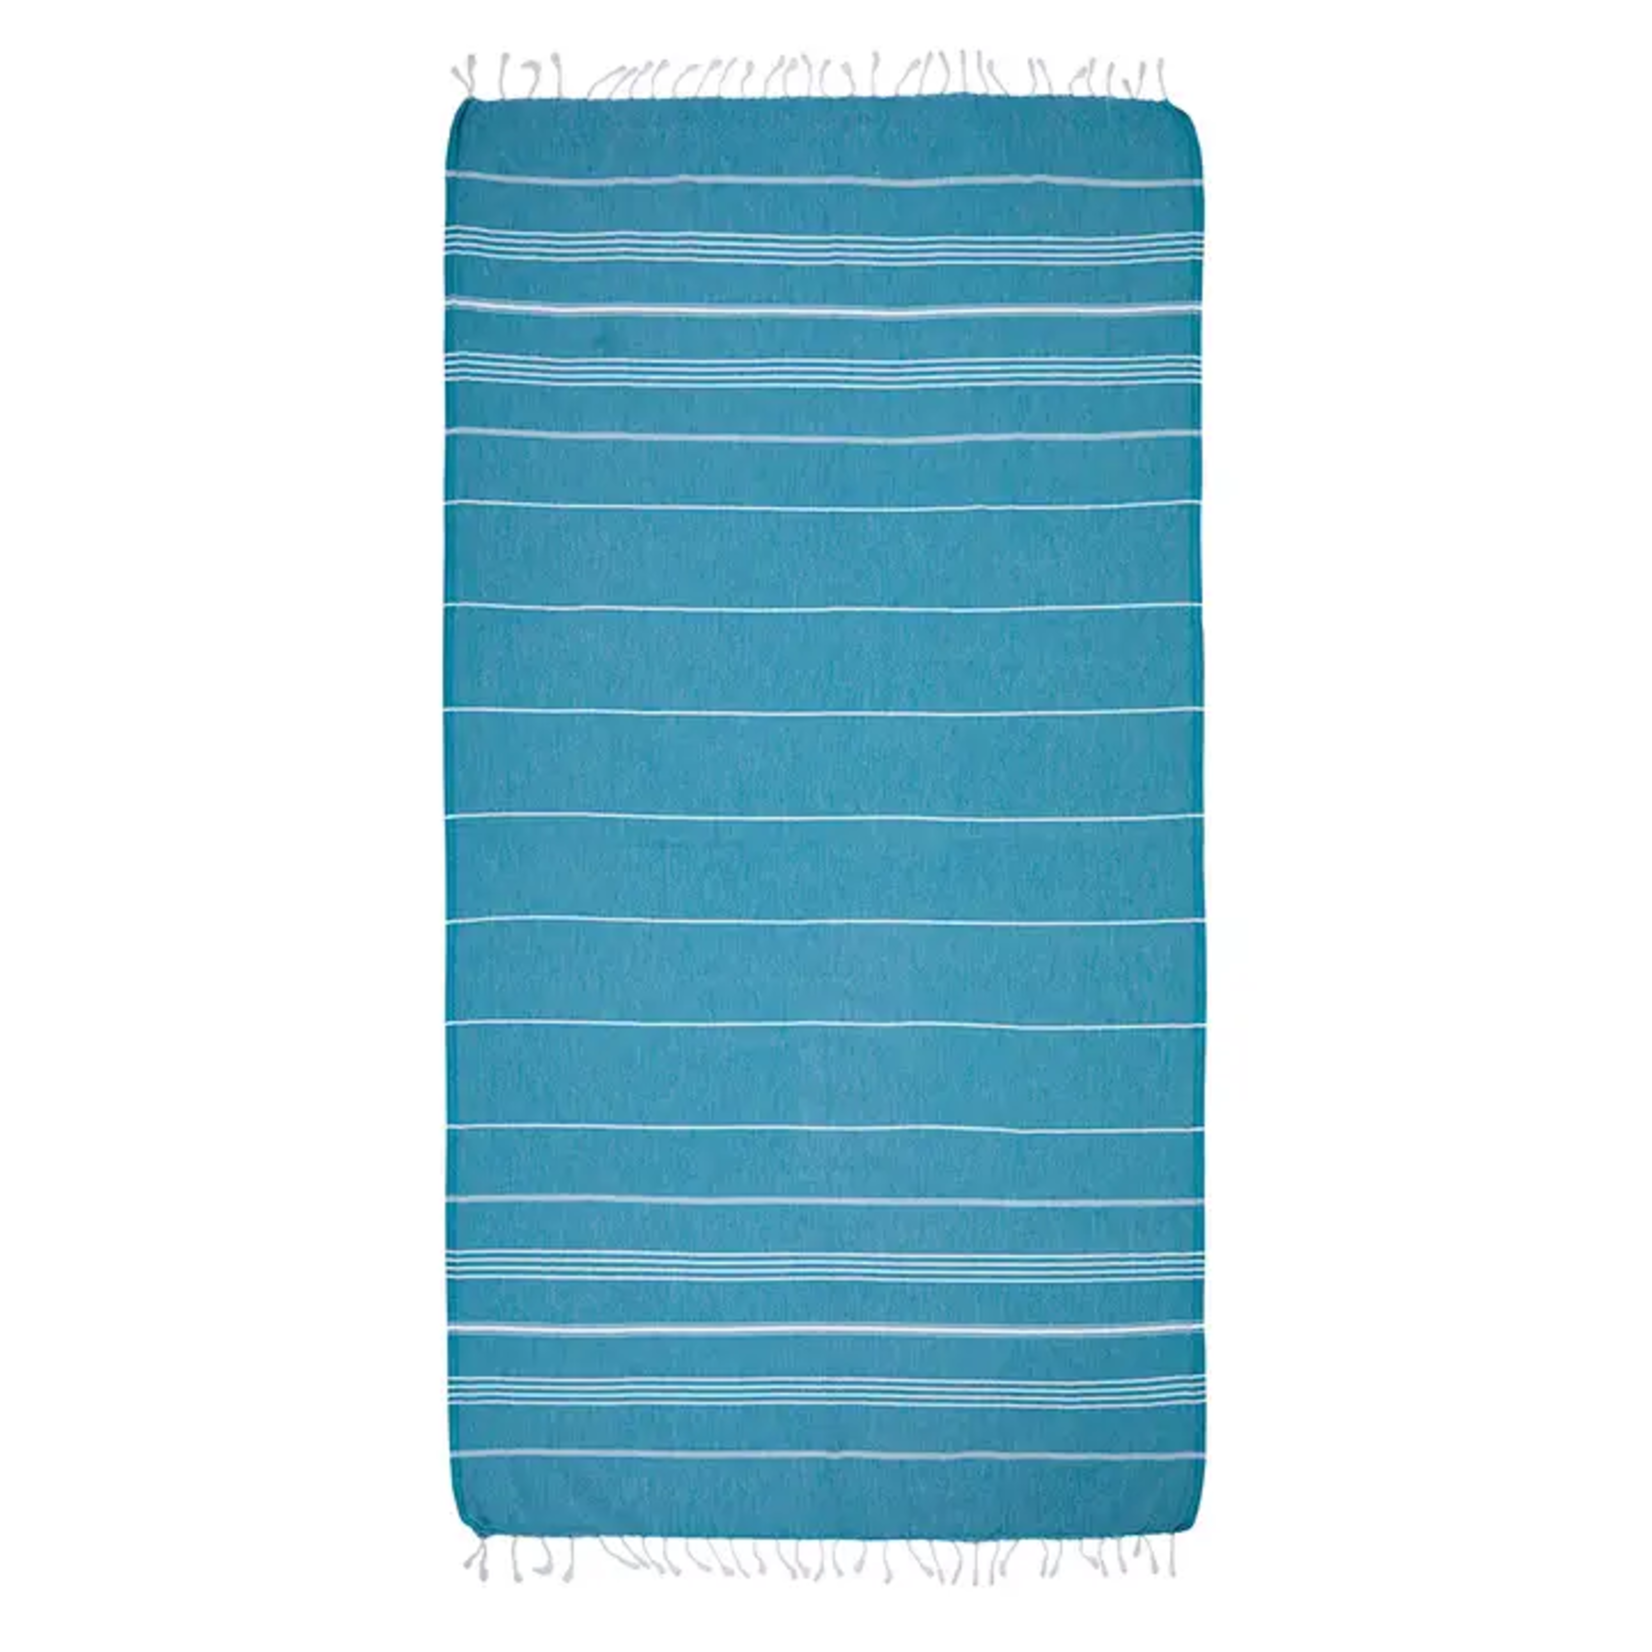 Turkish Towel - Teal Stripe